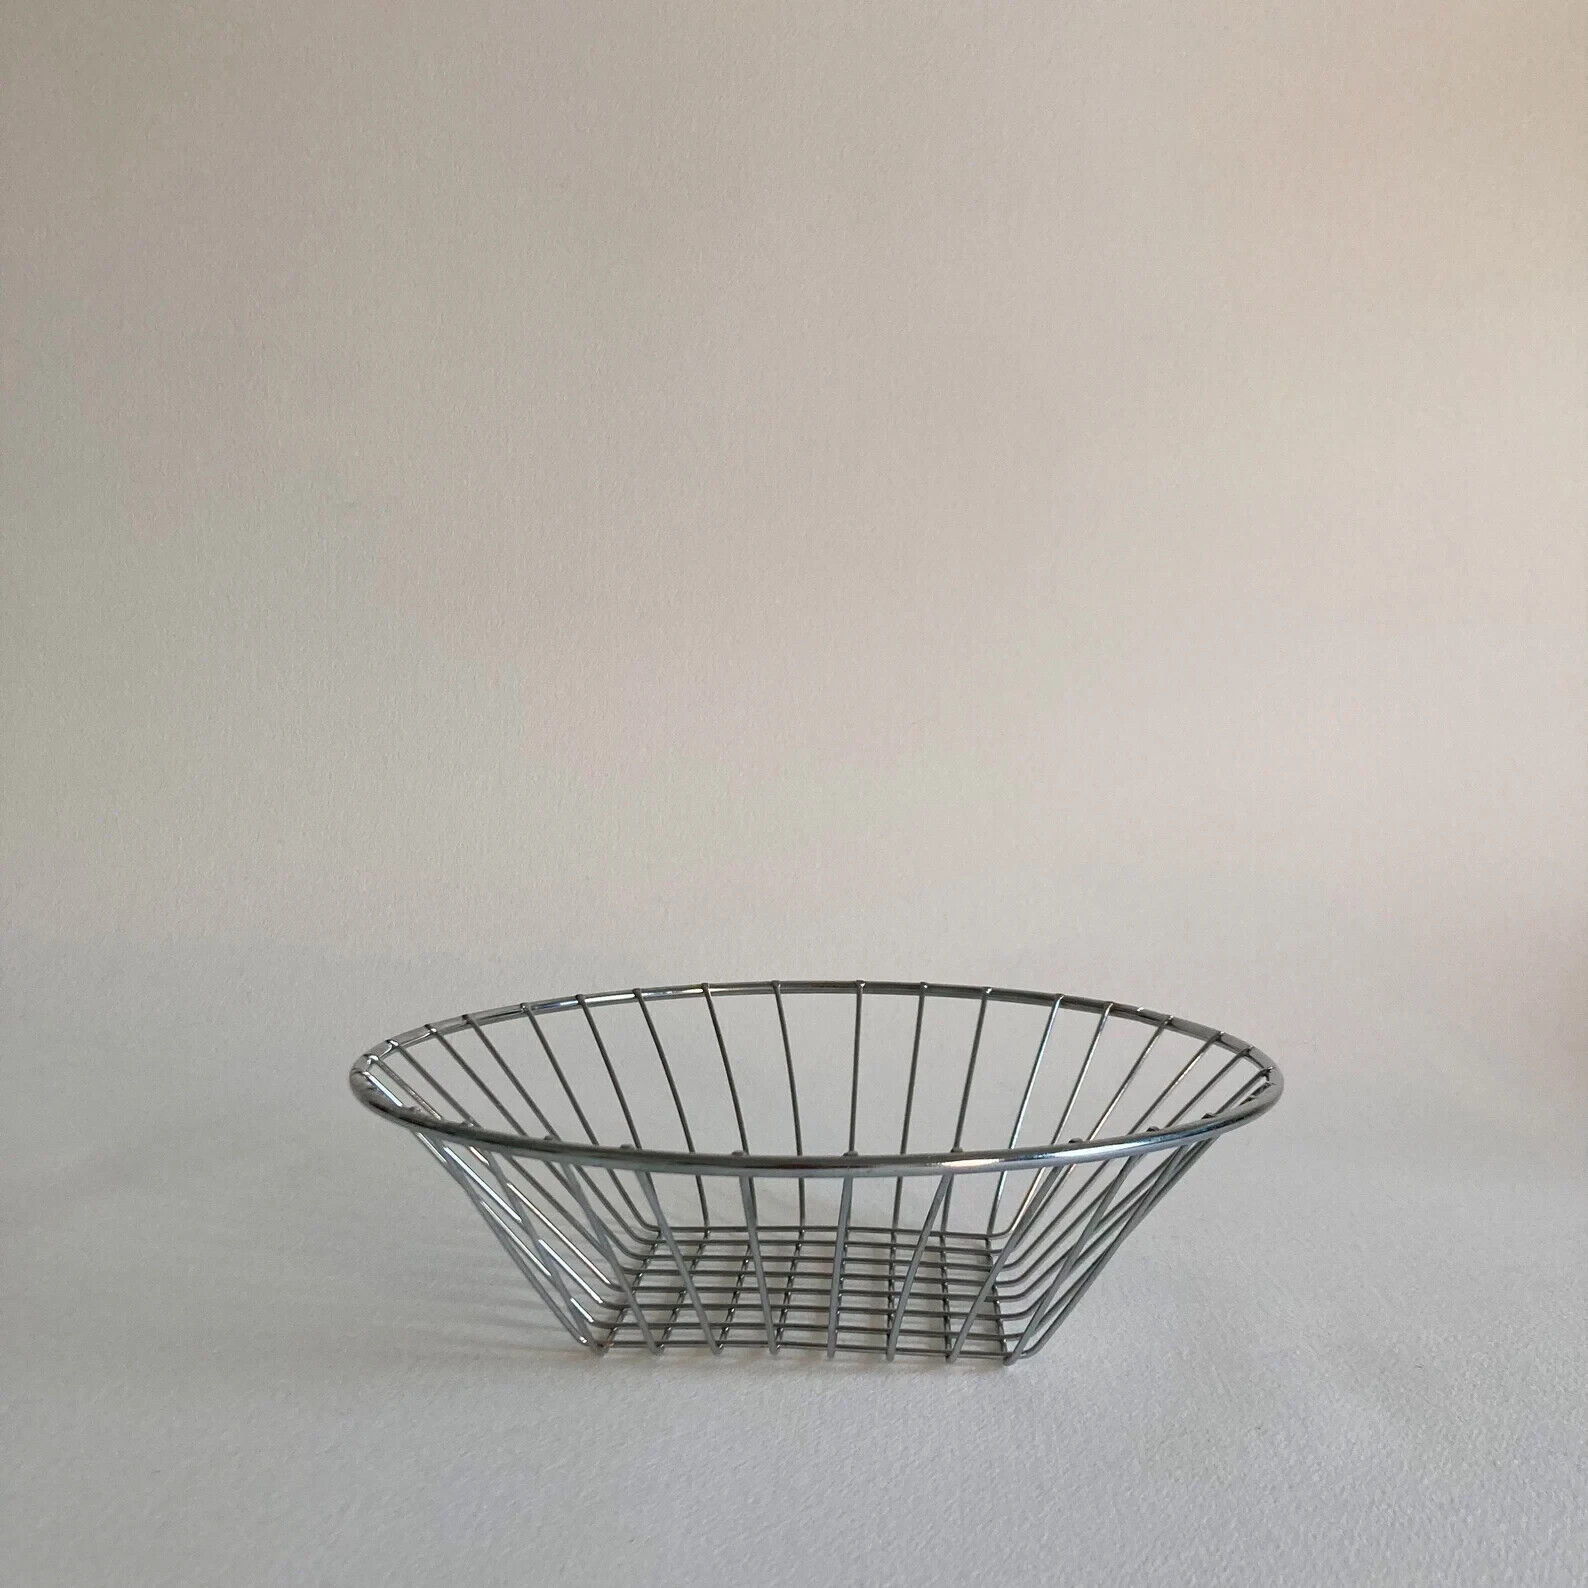 1980s, Modernist Silver Metal Basket w/ Geometric Pattern – 7.75 Inches Wide